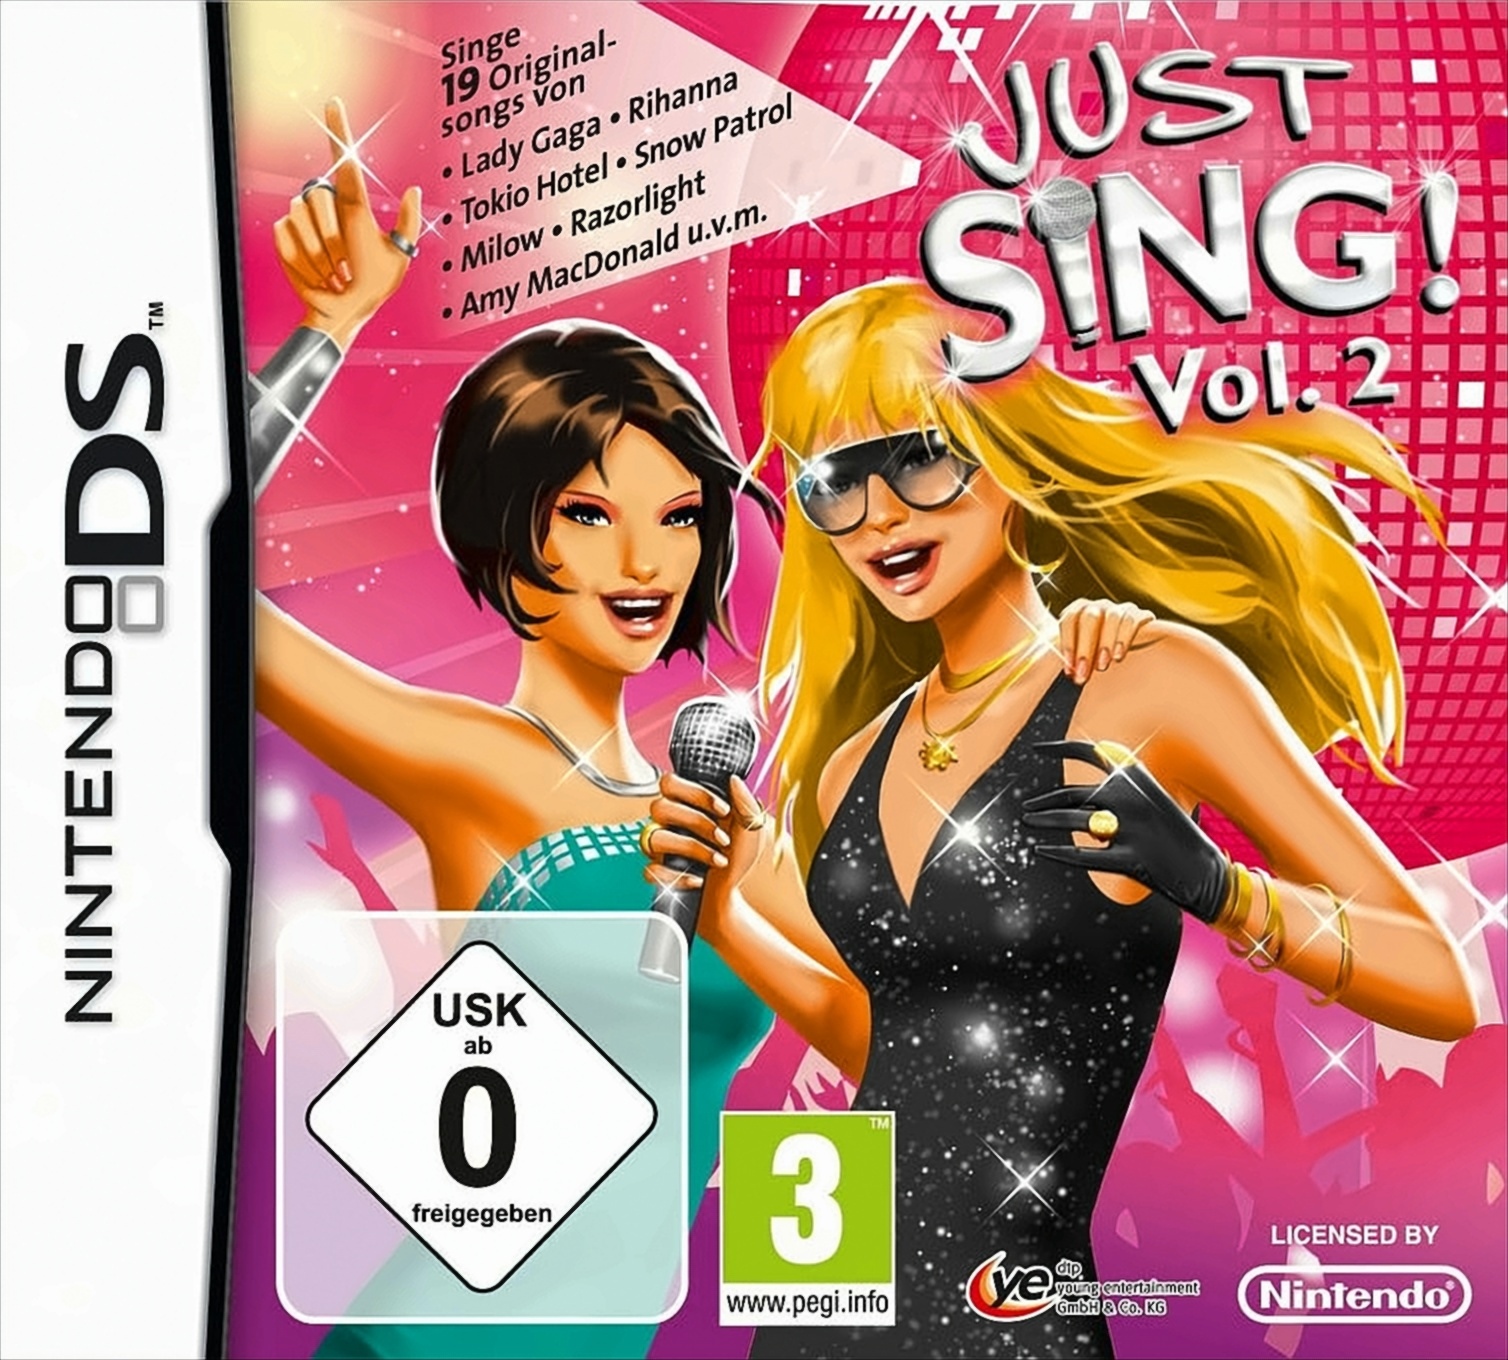 Vol. [Nintendo DS] - 2 Sing! Just